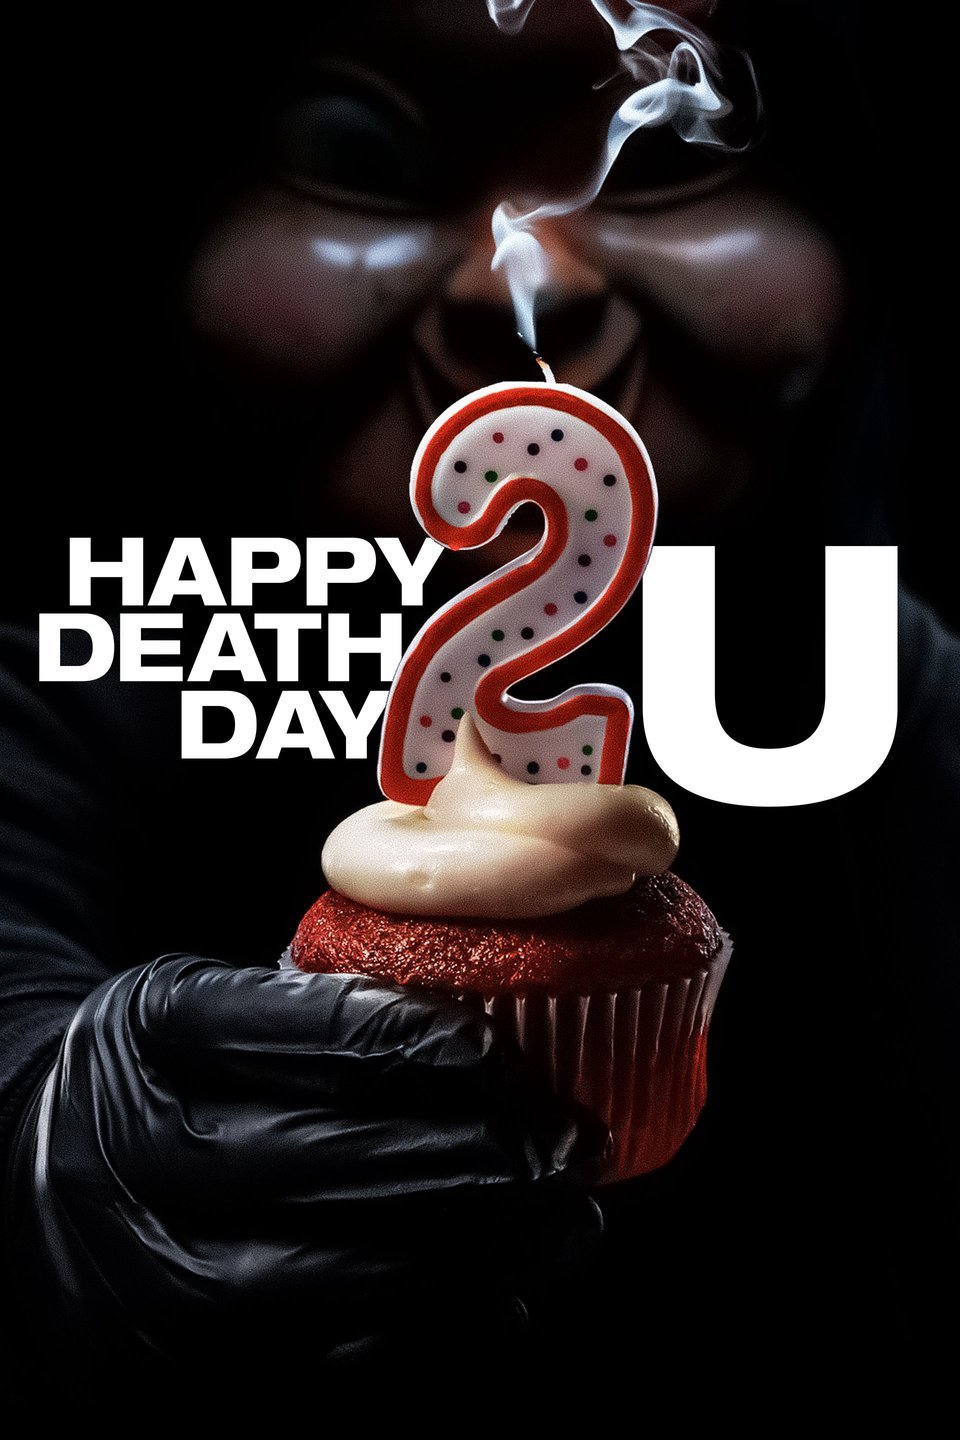 [MINI Super-HQ] Happy Death Day 2U (2019) สุขสันต์วันตาย 2U [1080p] [พากย์ไทย DTS + เสียงอังกฤษ DTS] [บรรยายไทย + อังกฤษ] [เสียงไทย + ซับไทย] [OPENLOAD]